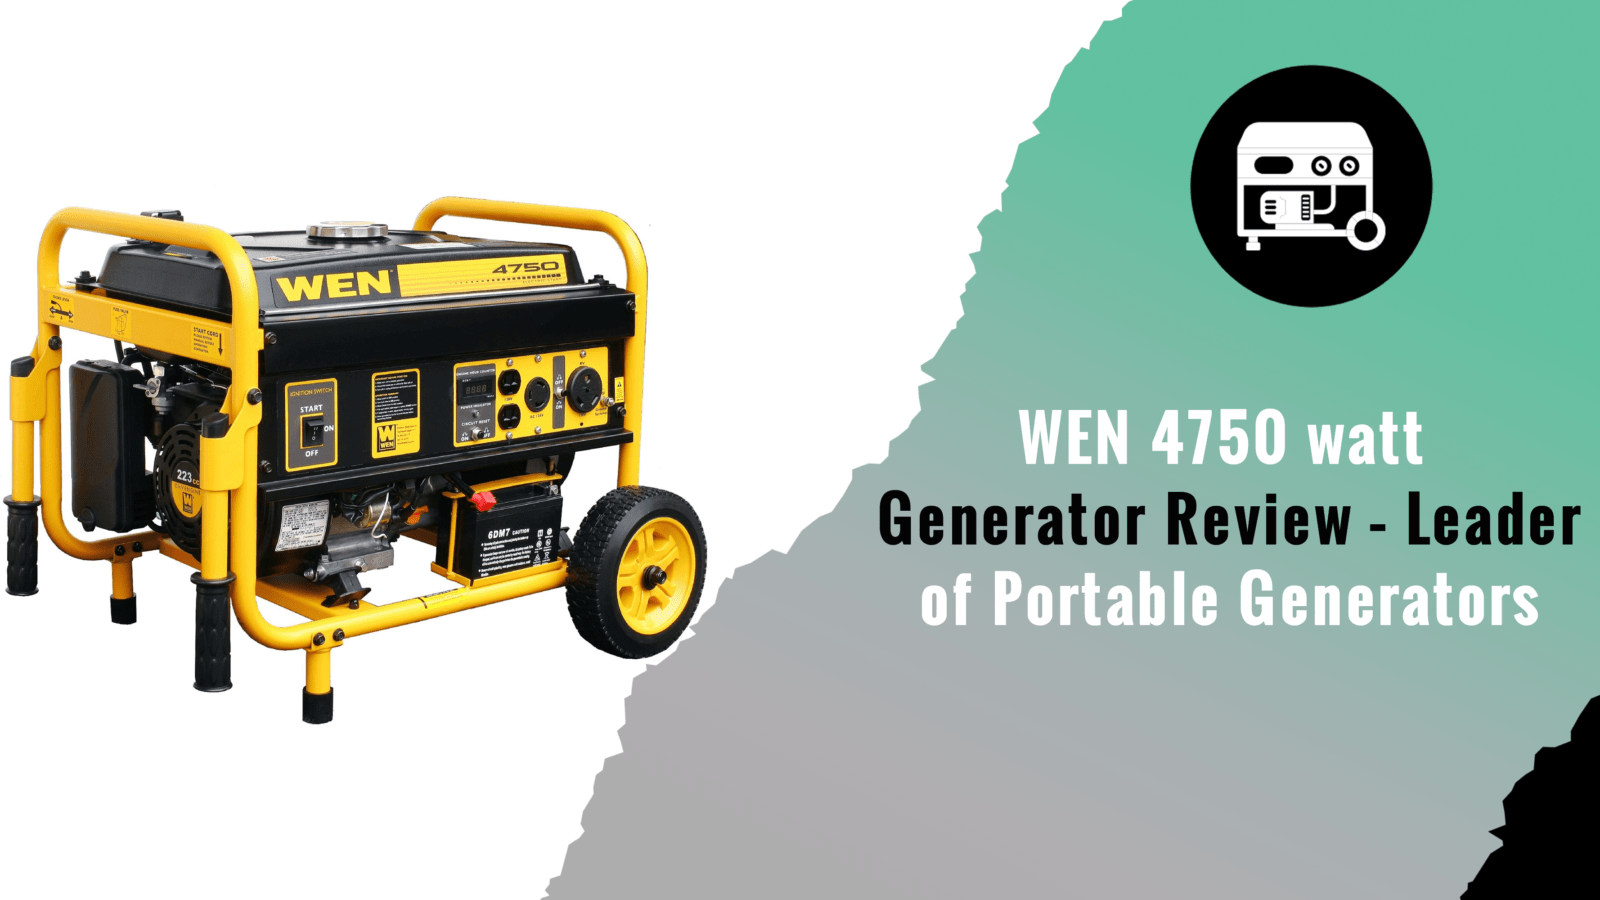 WEN 4750 watt Generator Review – Leader of Portable Generators